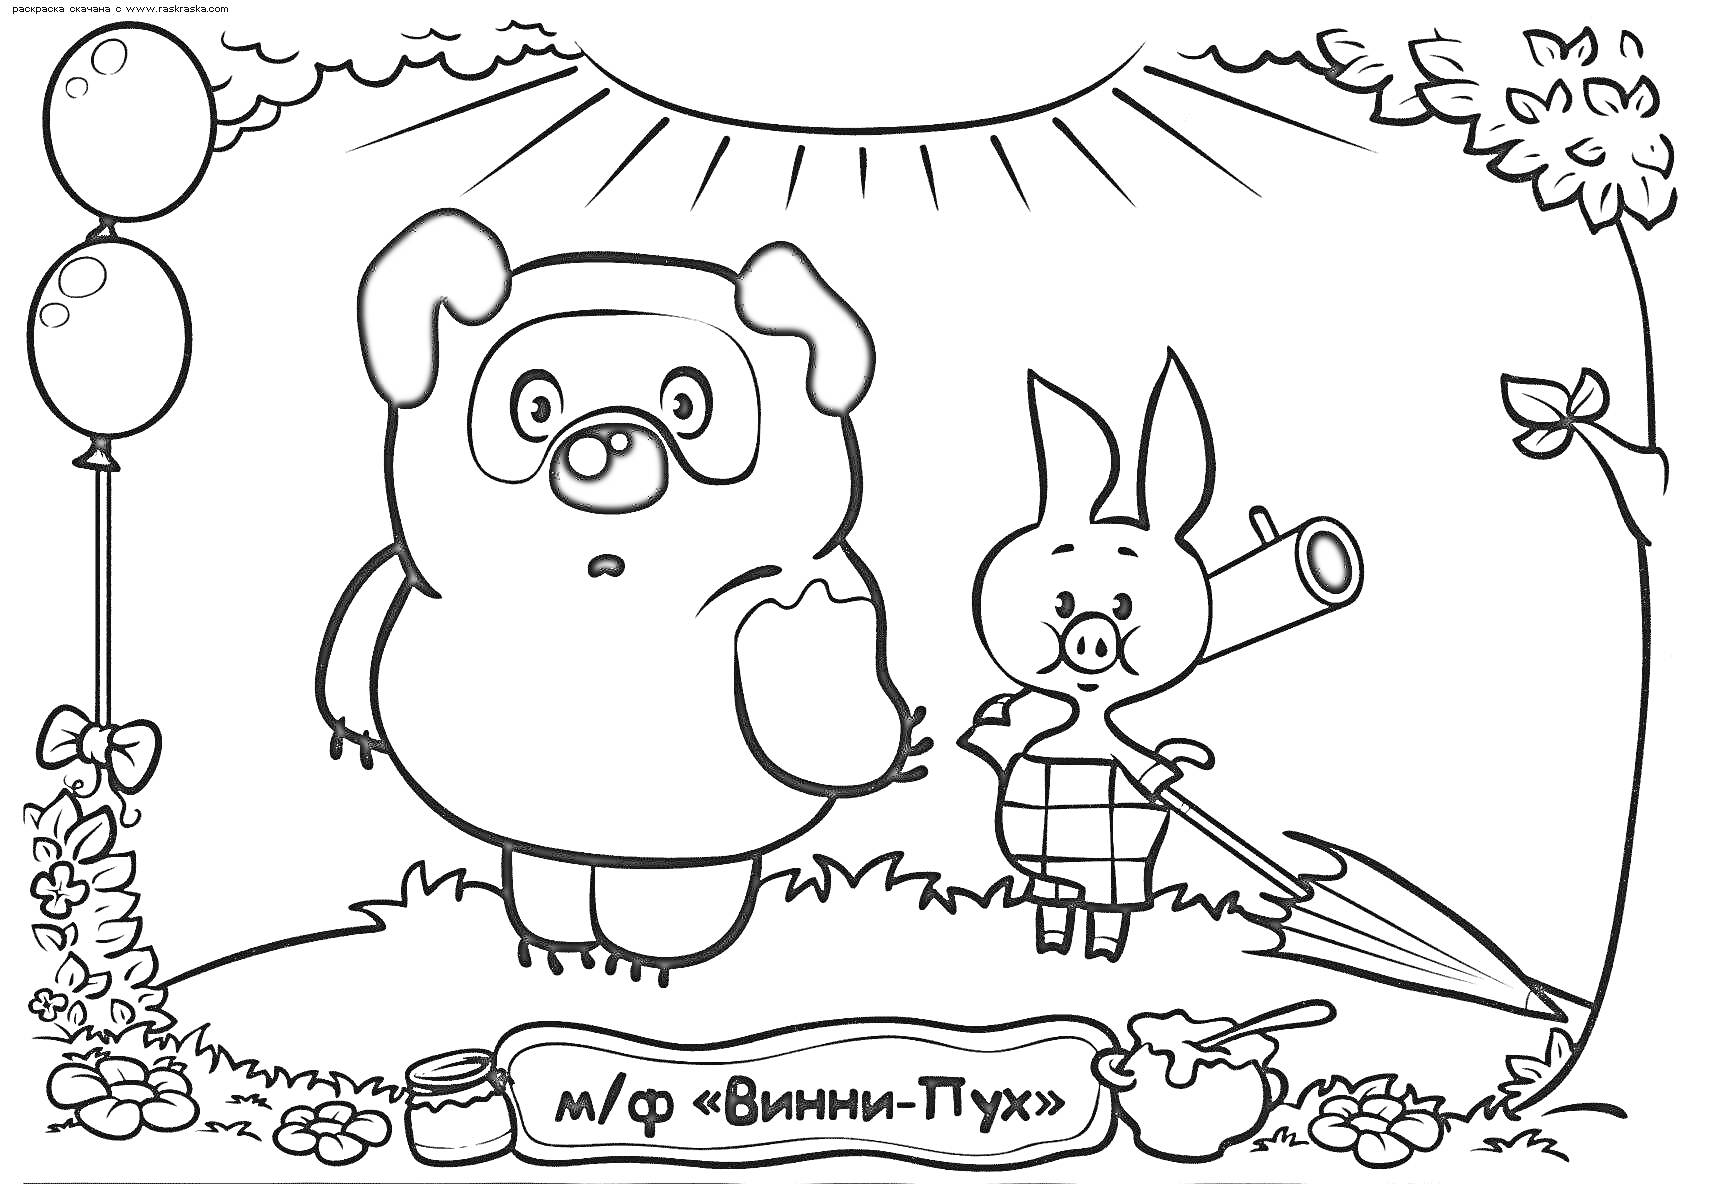 Винни-Пух и Пятачок на поляне с шариками и горшком мёда